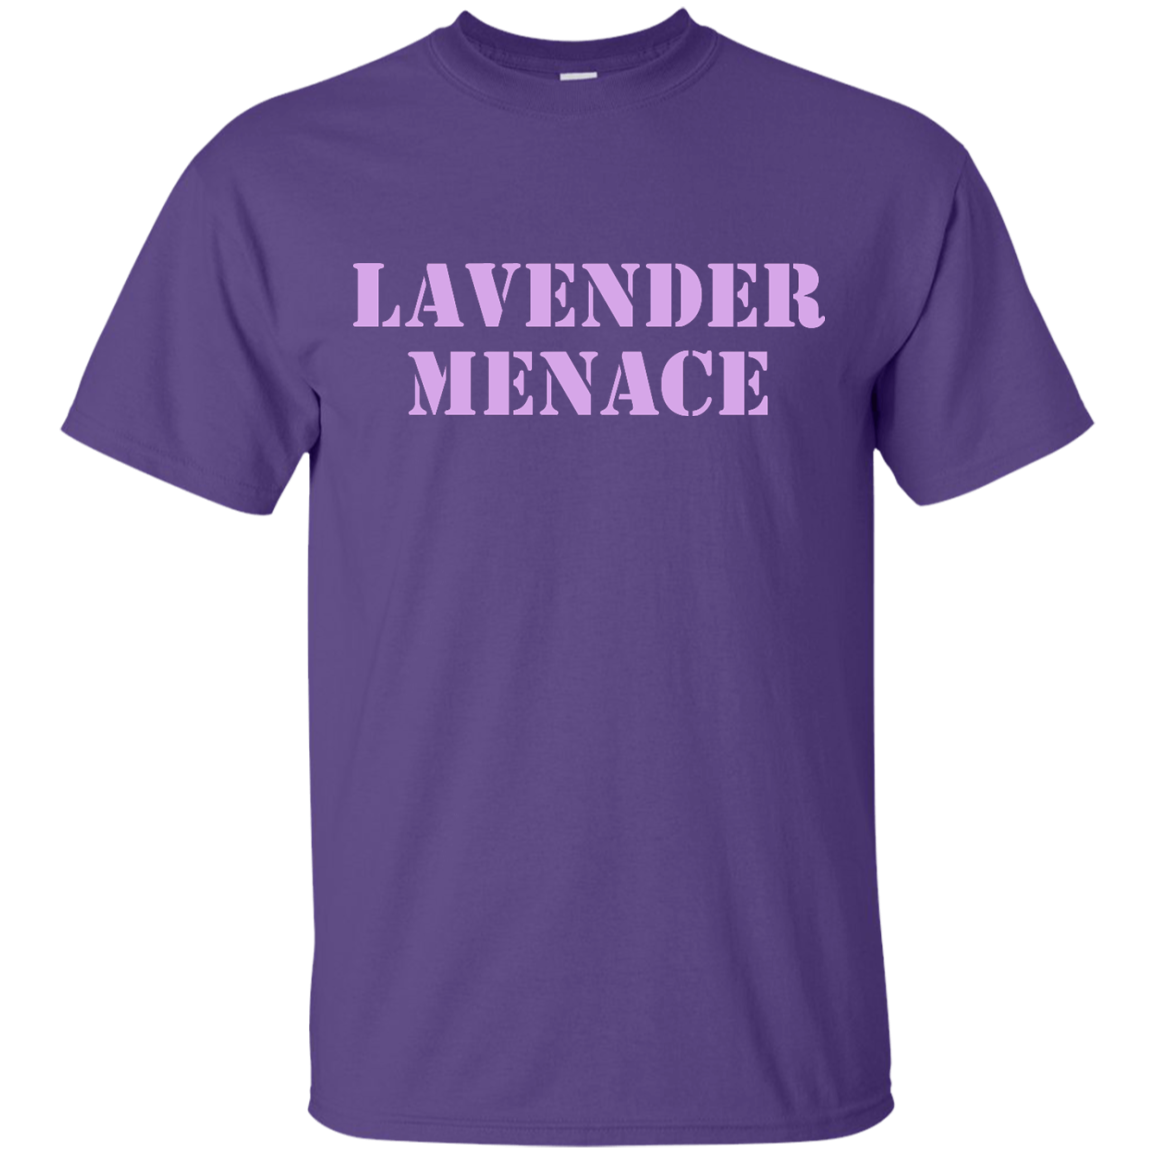 Lavender Menace shirt, sweater: Lesbian history shirt